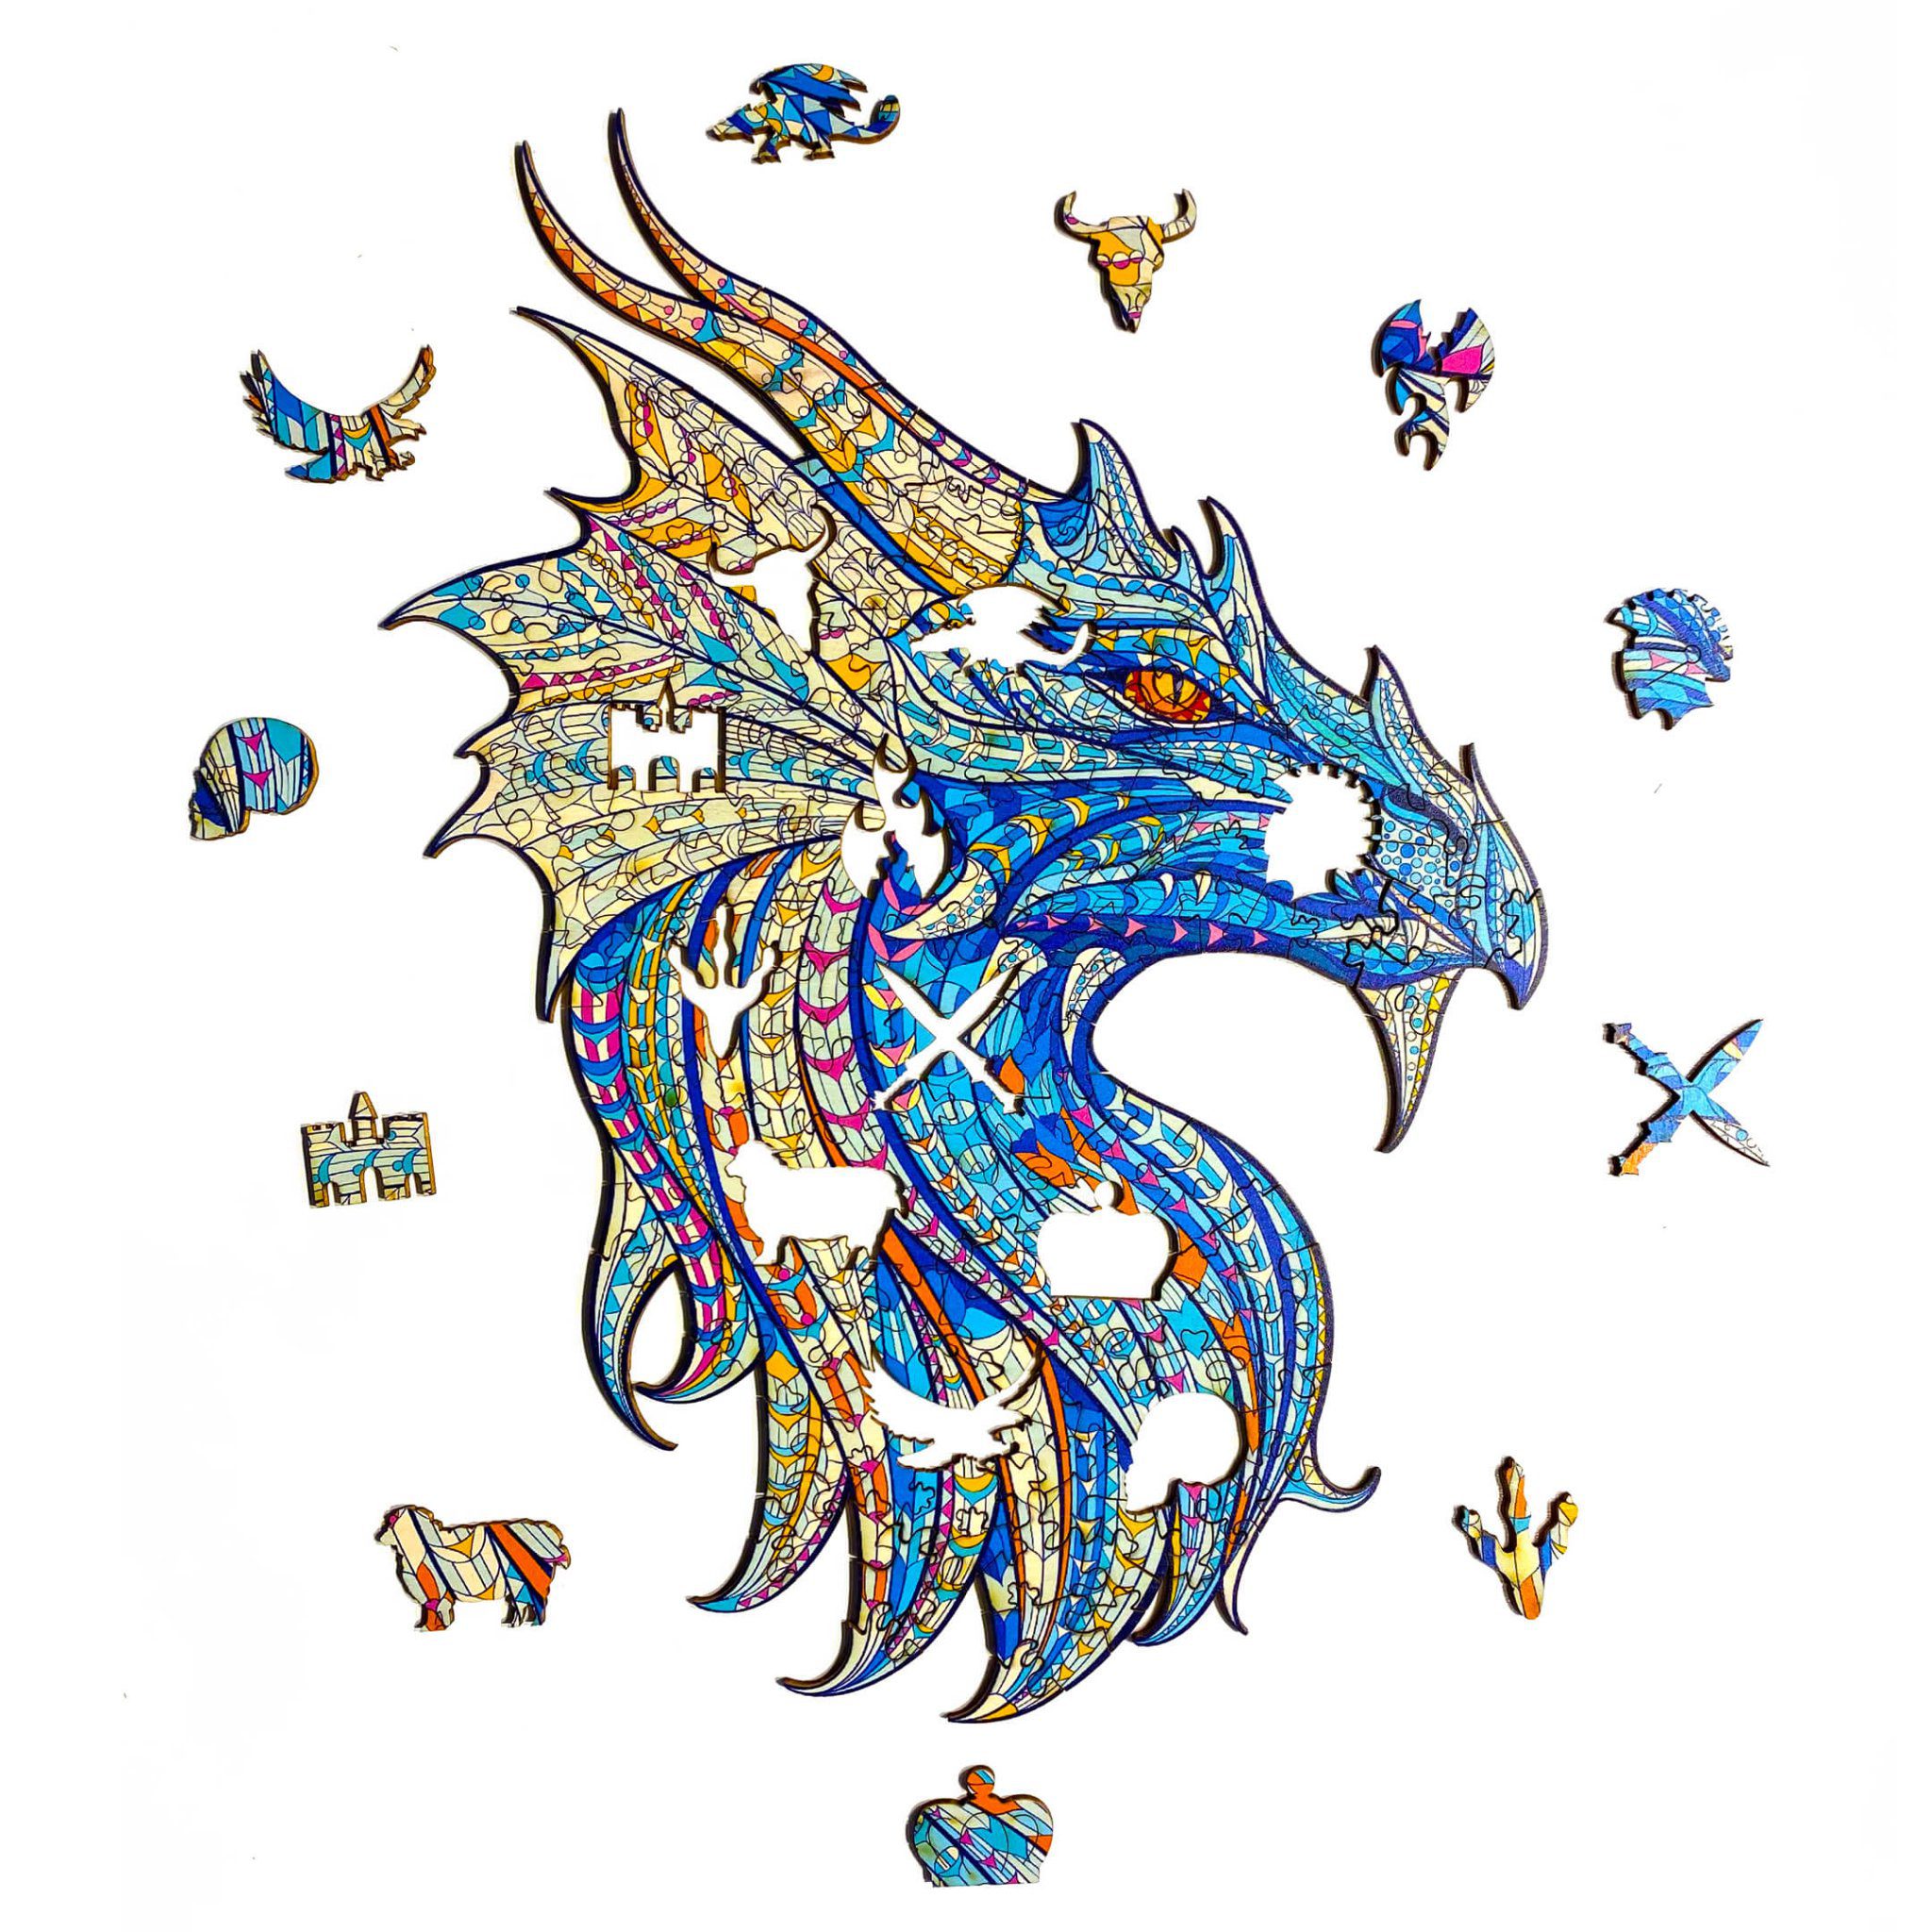 Dřevěné puzzle – Warrior Dragon (drak)